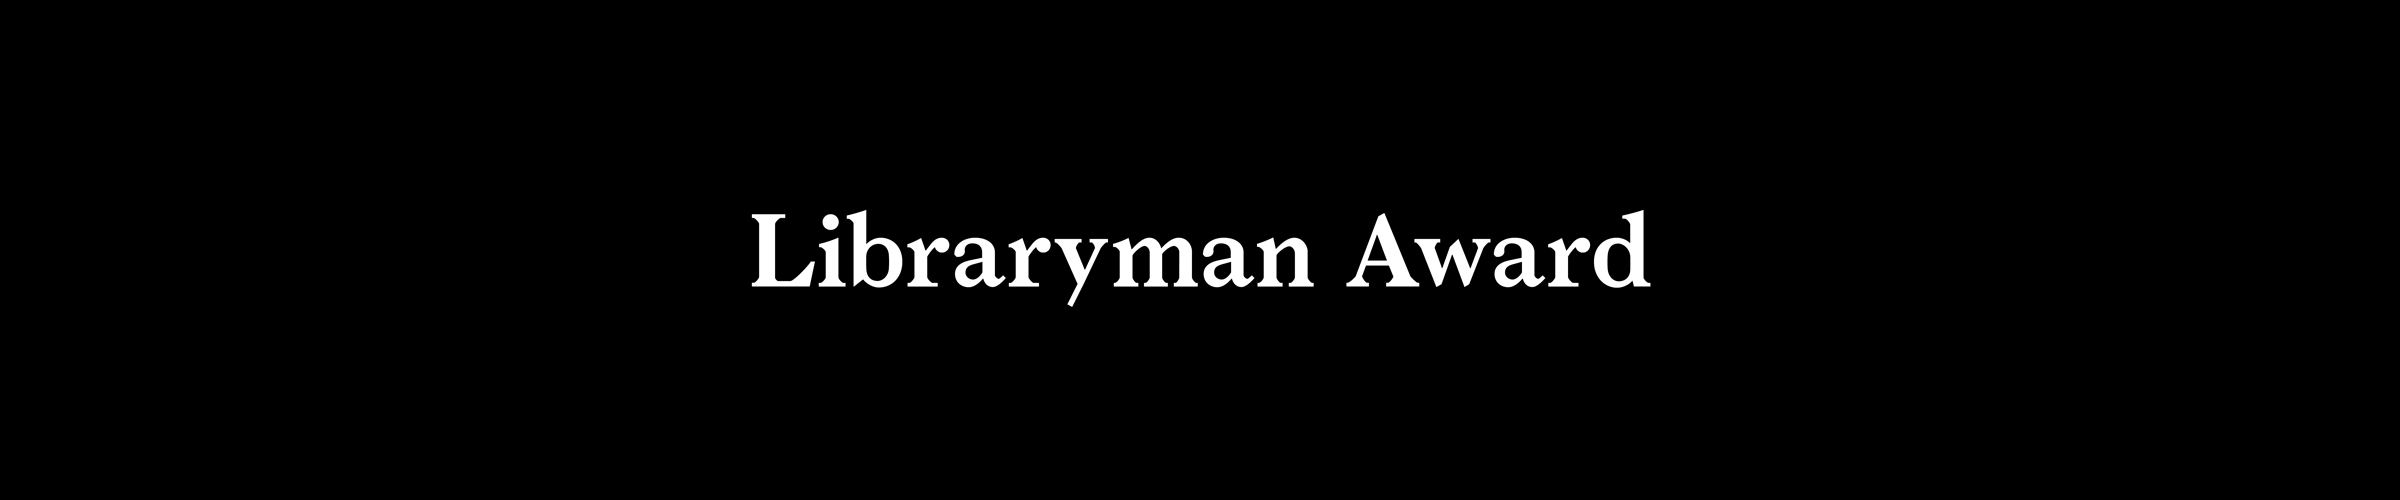 The Libraryman Award